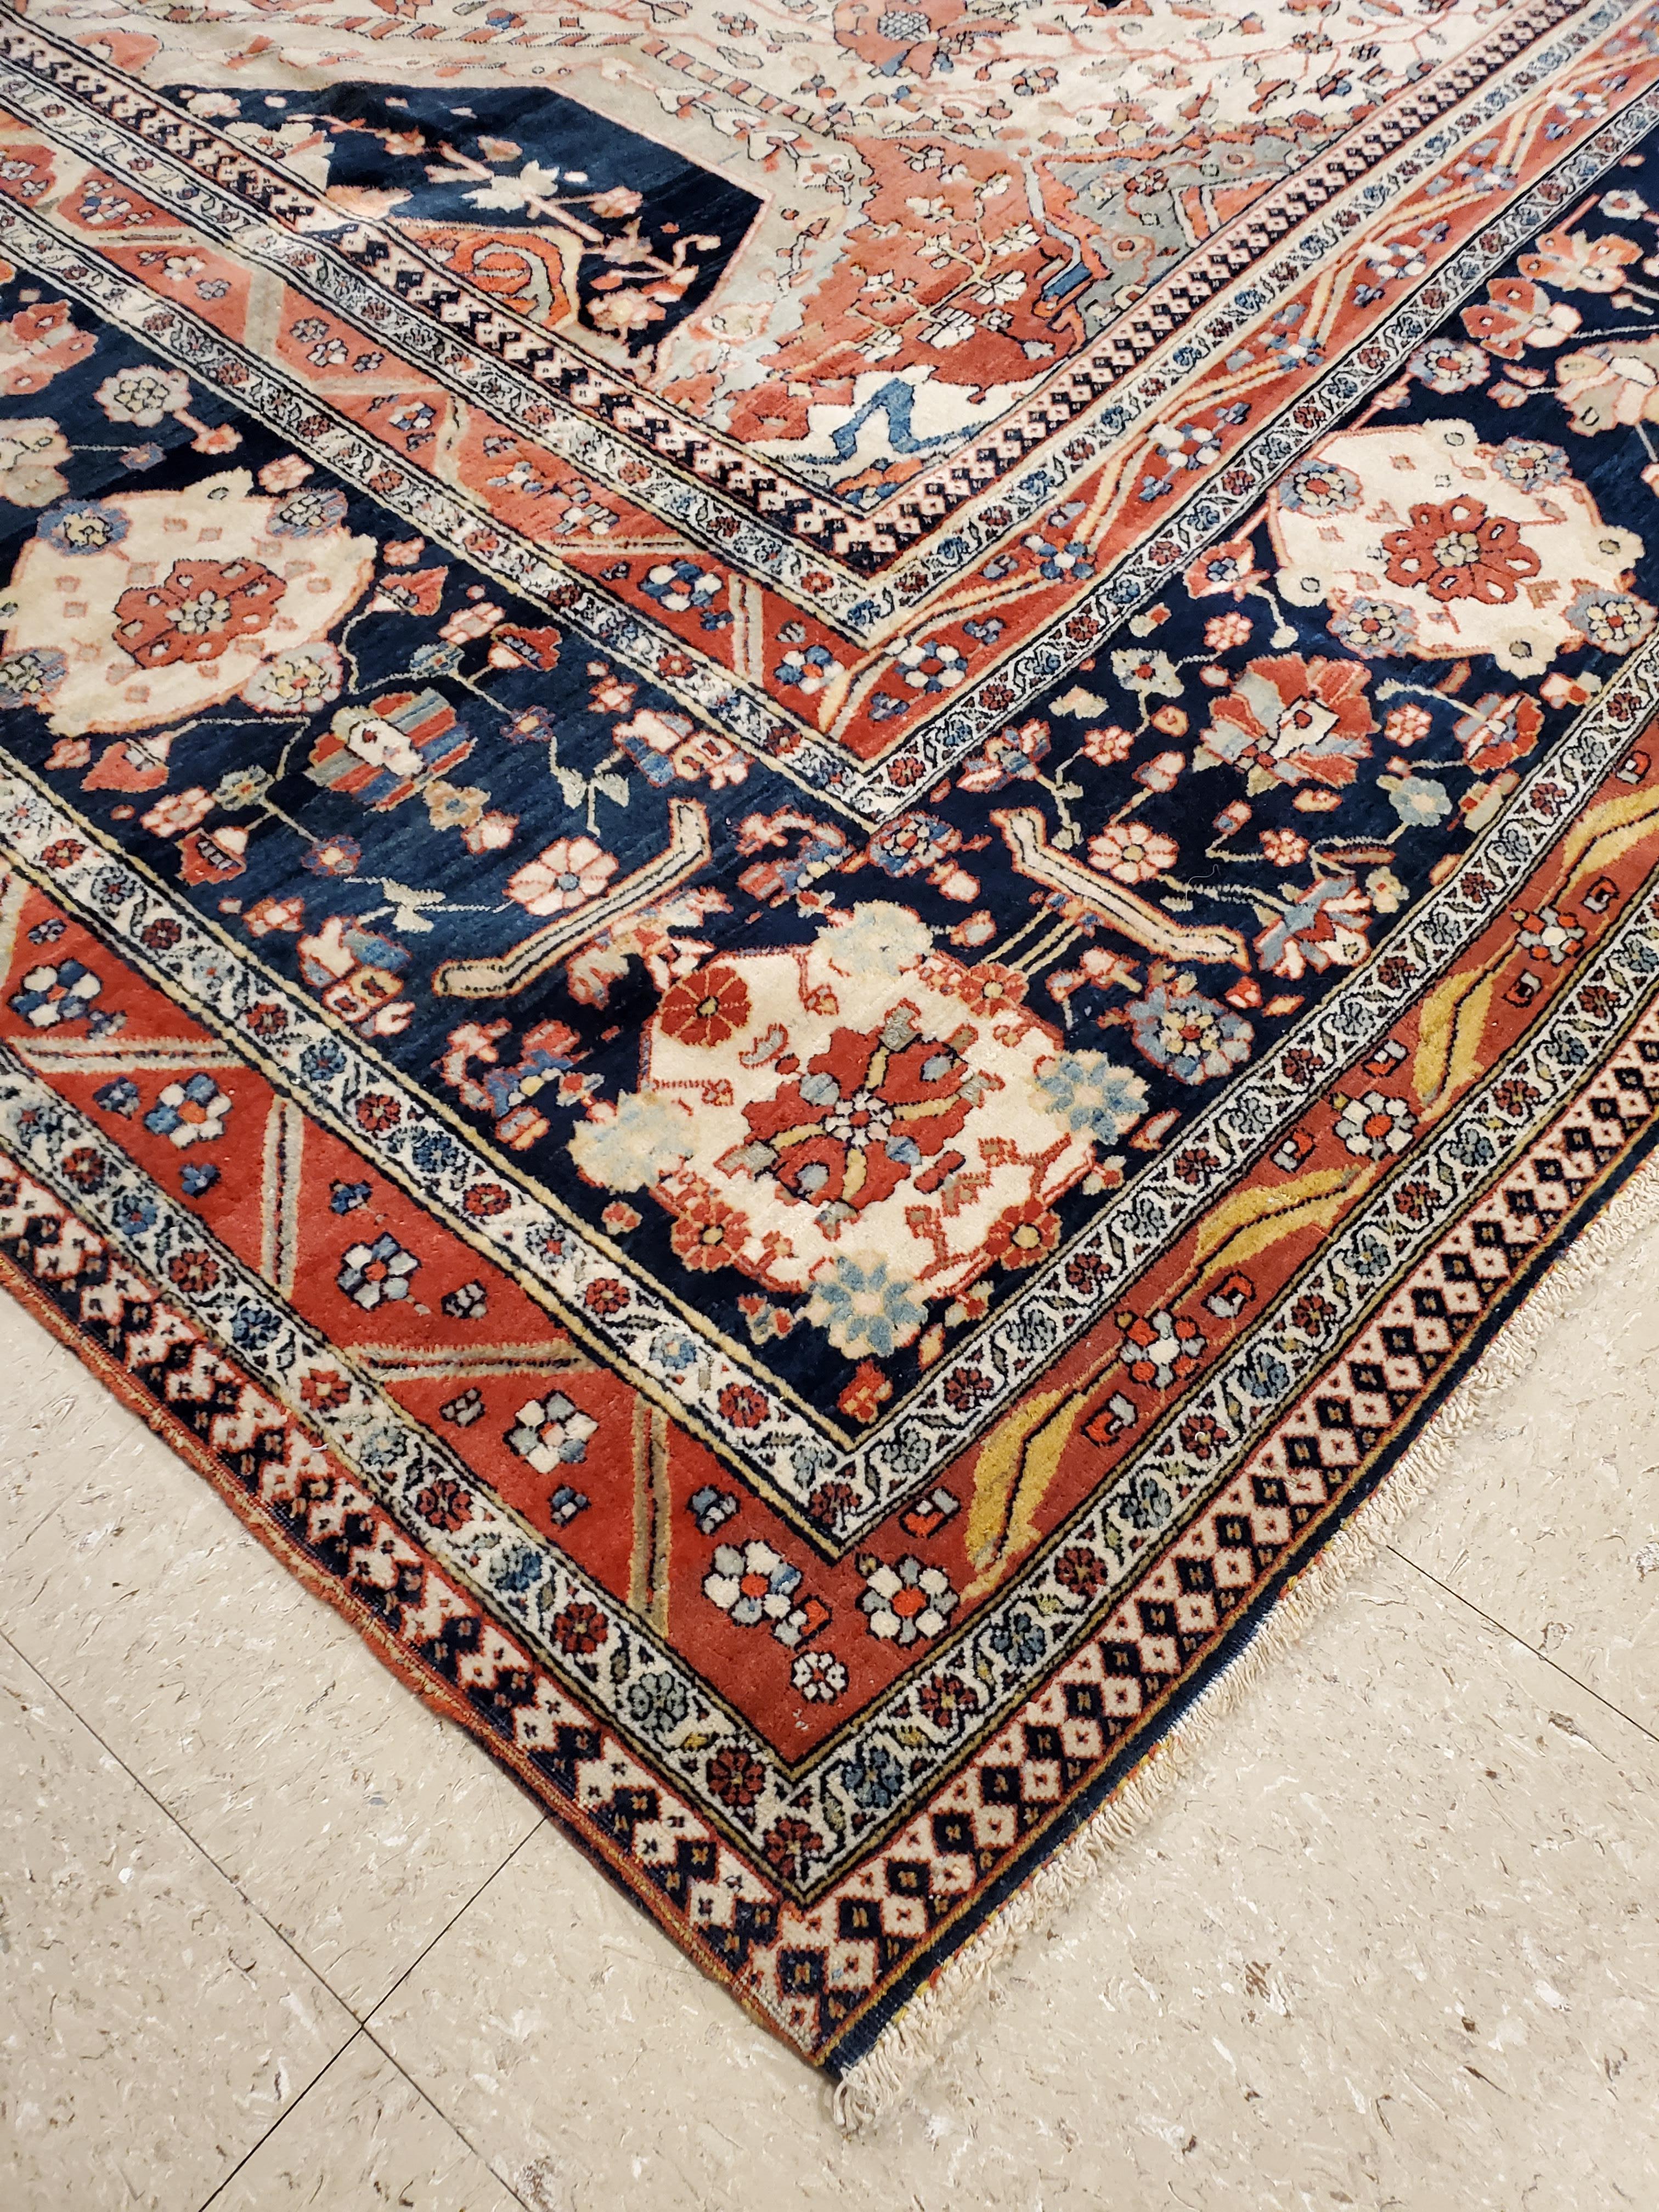 Antique Persian Mohtasham Kashan Carpet, Traditional, Ivory, Blue, Green, Reds 9